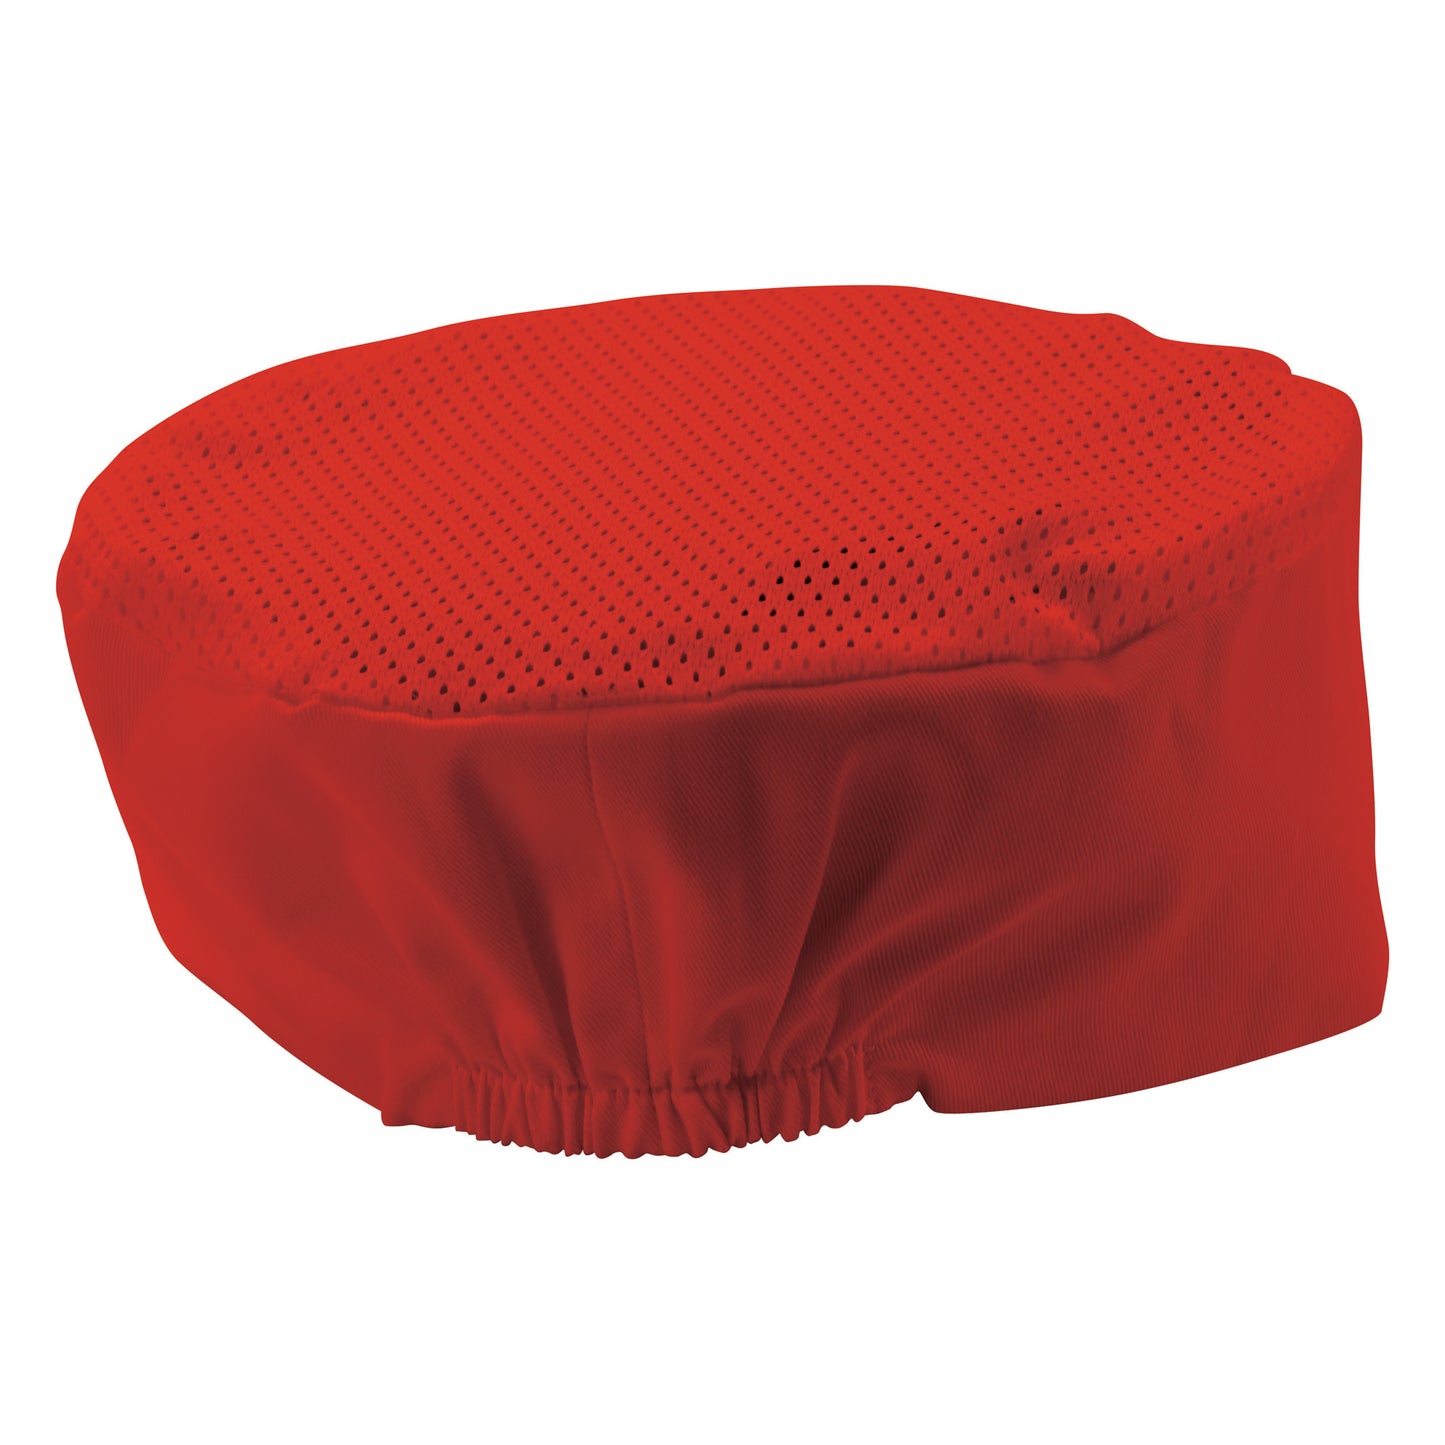 CHPB-3RX - Ventilated Pillbox Hats - Red, Regular